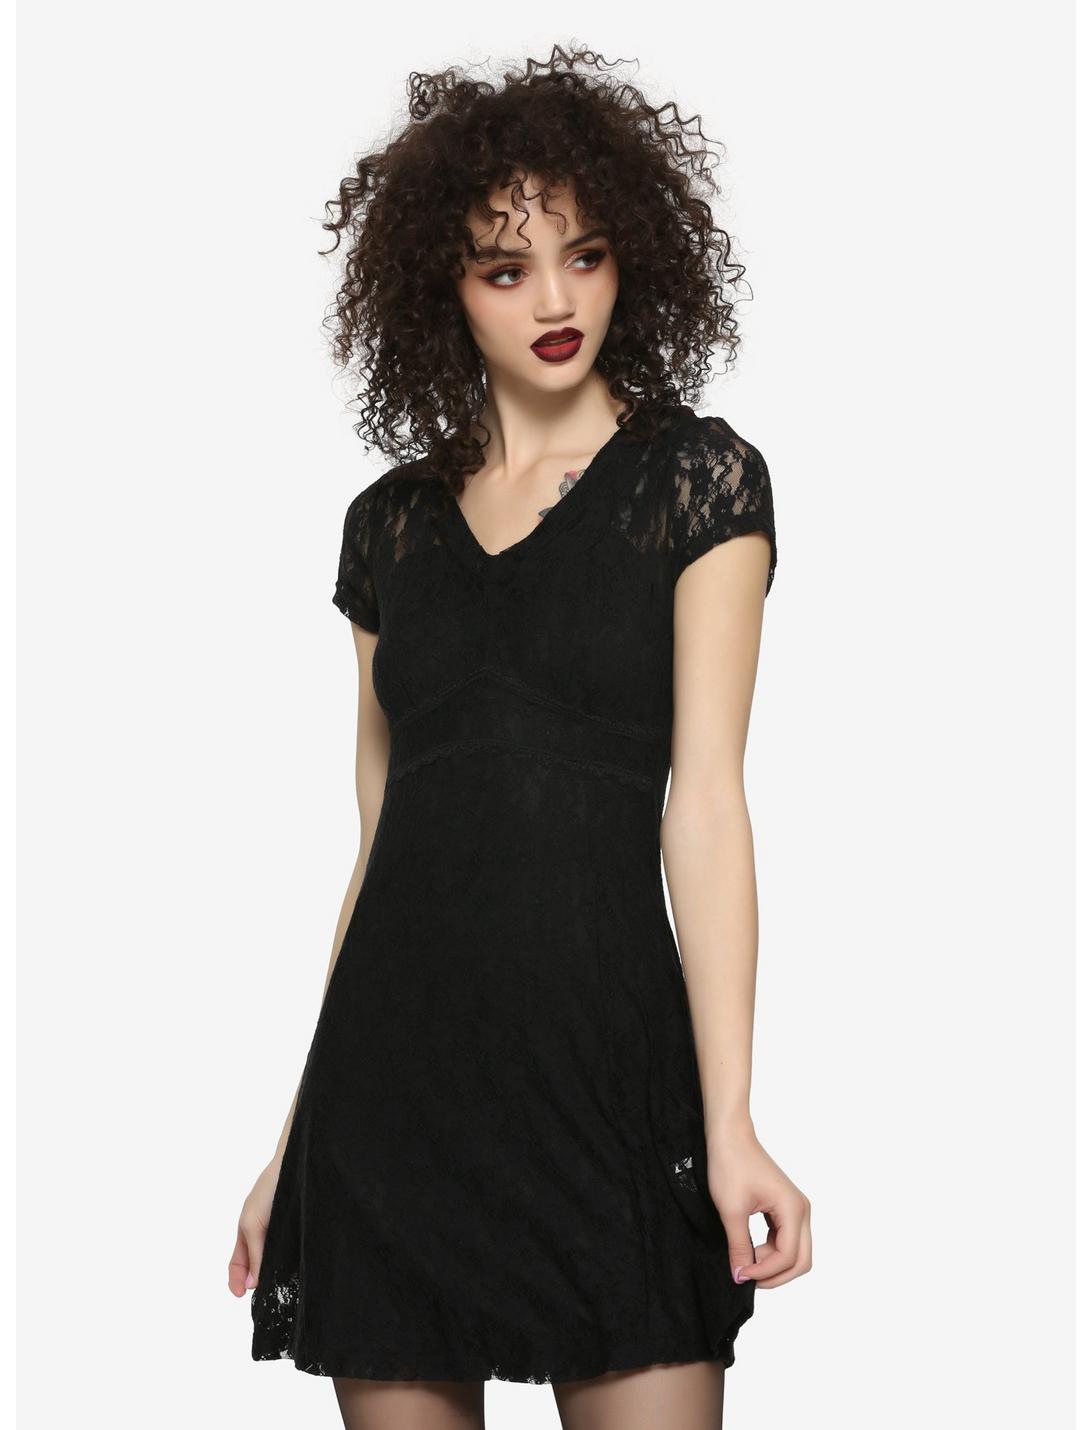 Royal Bones By Tripp Black Lace Dress, BLACK, hi-res